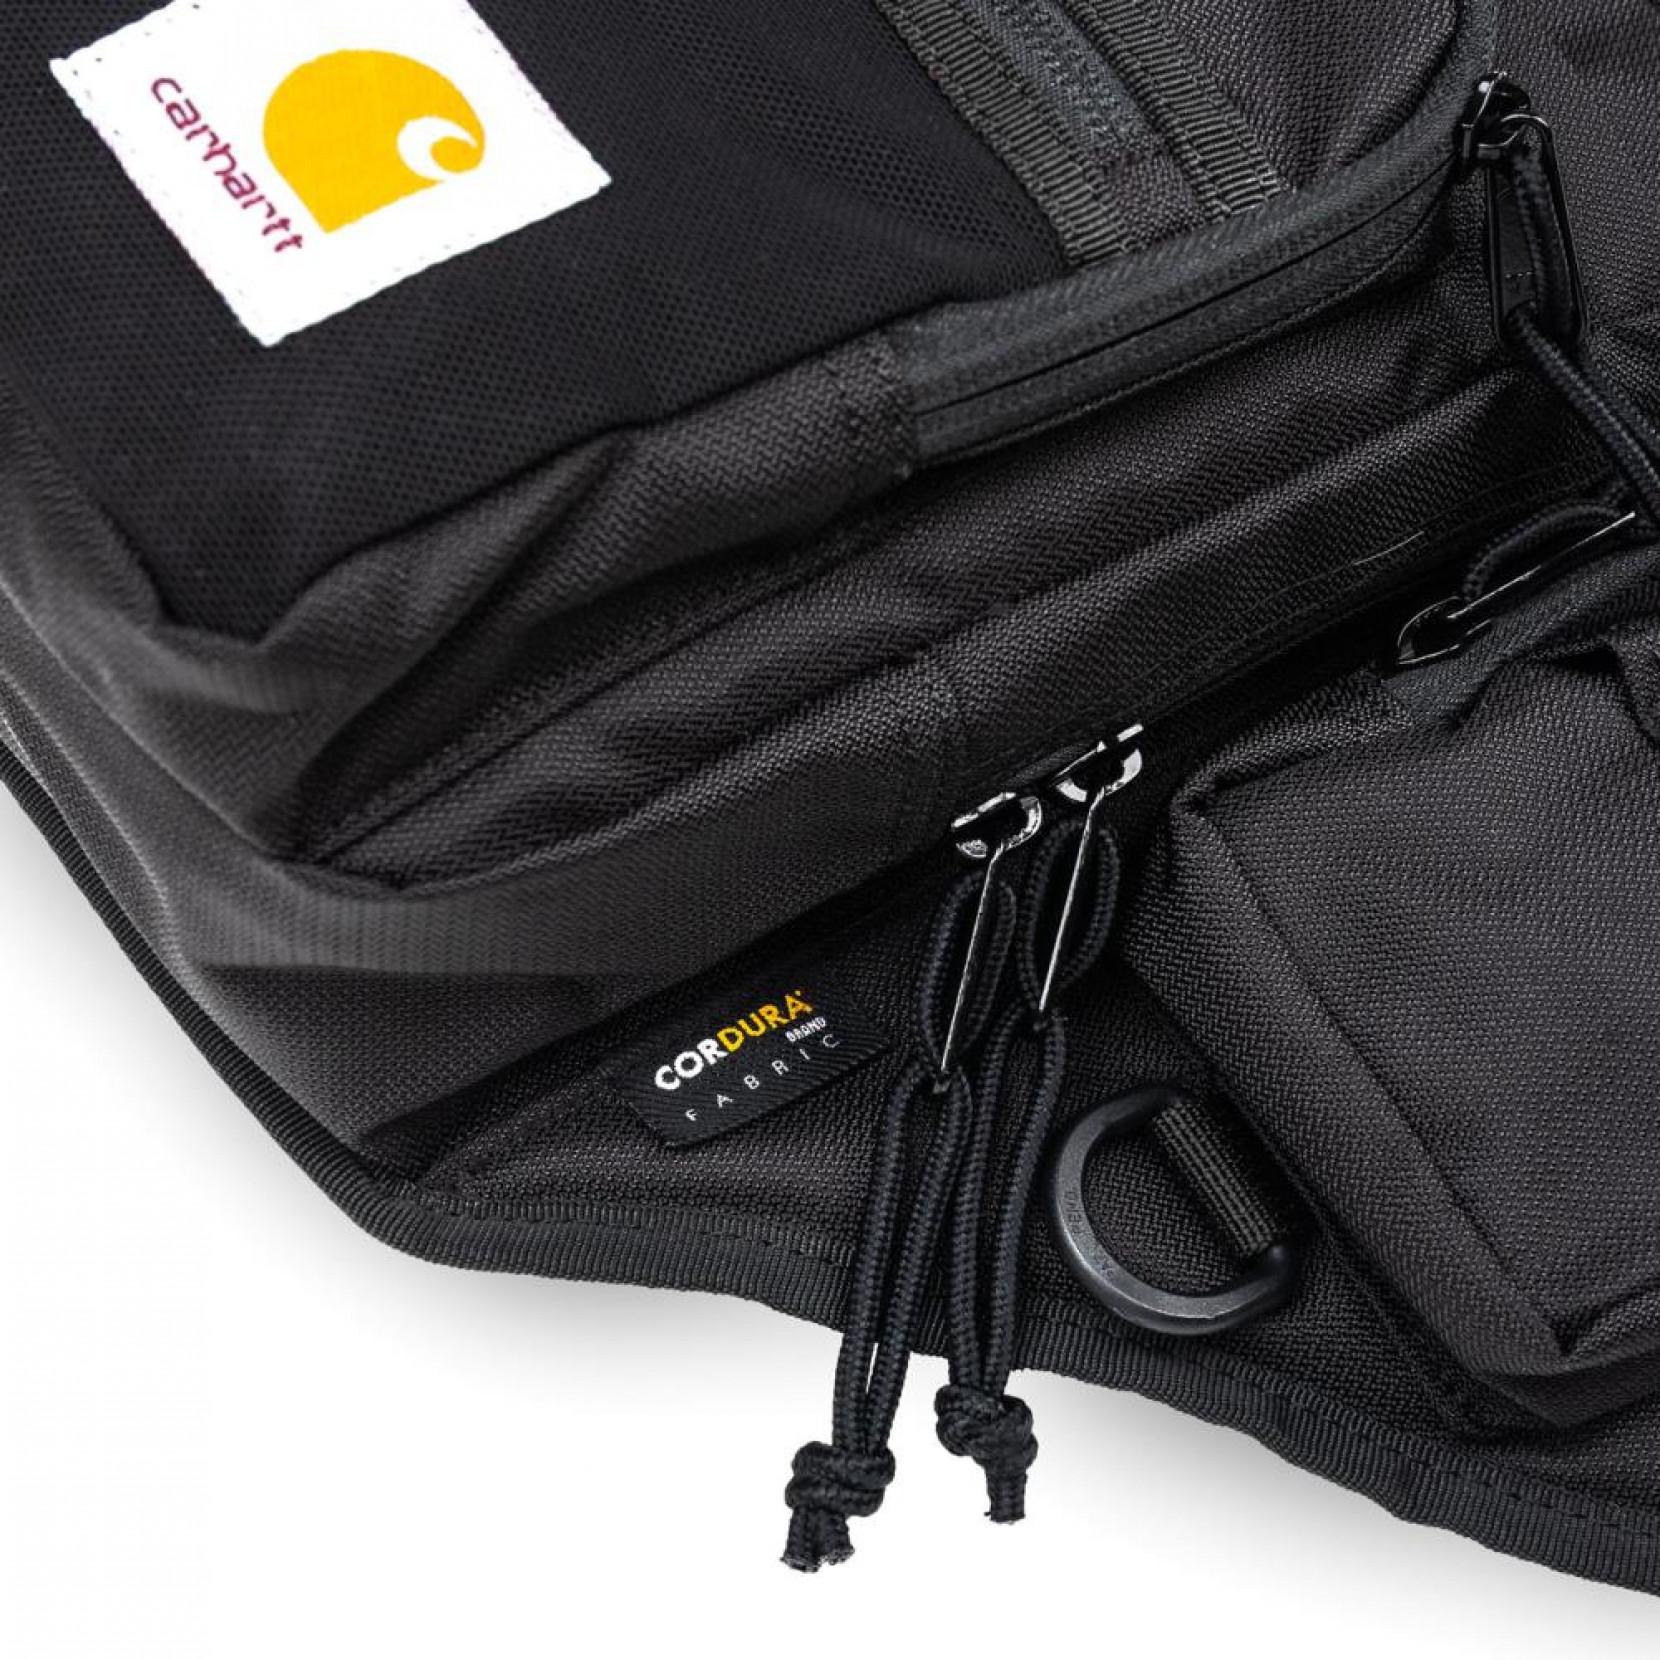 Carhartt WIP Synthetic Delta Shoulder Bag in Black for Men - Lyst